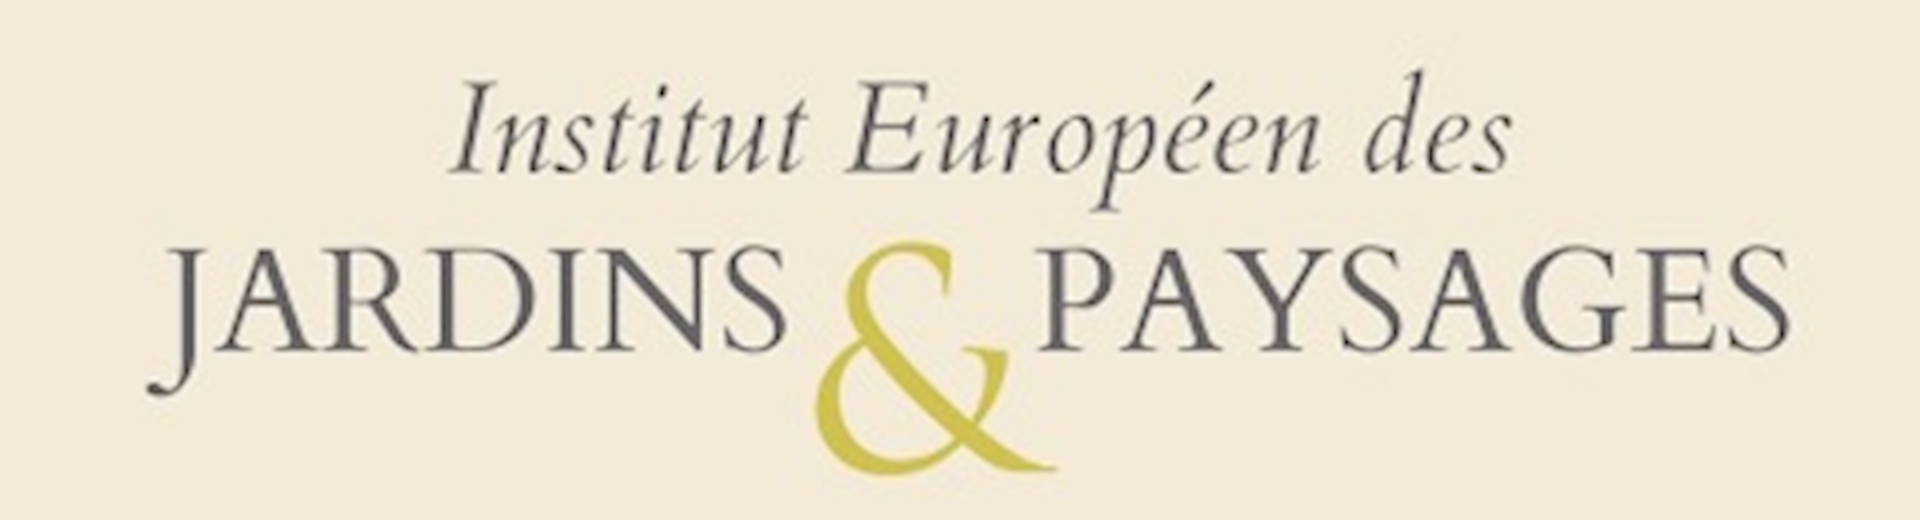 Institut Européen des Jardins & Paysages